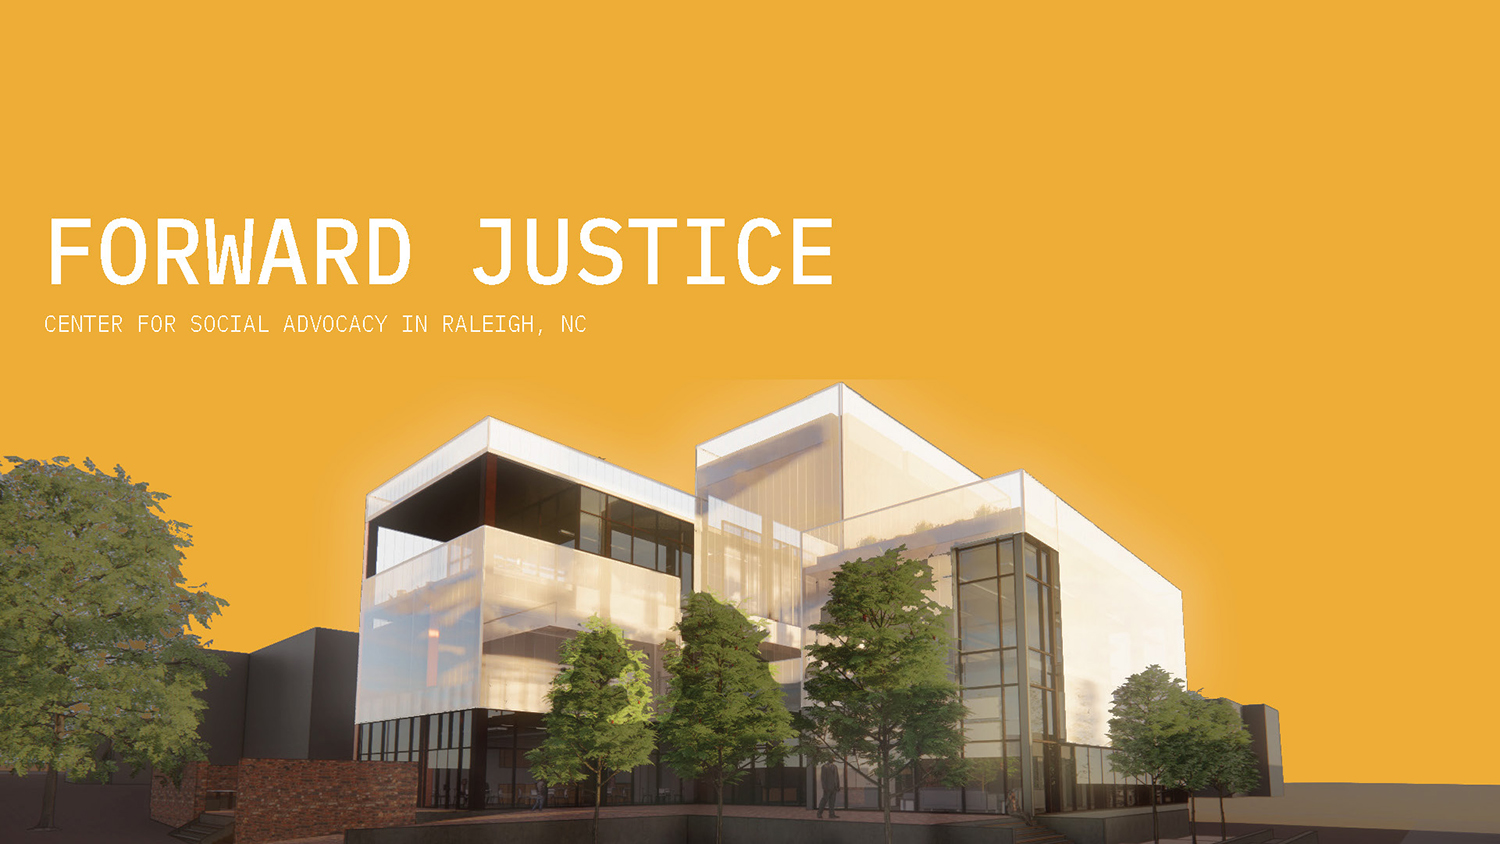 Cover Sheet for Jillian Ford Forward Justice Center